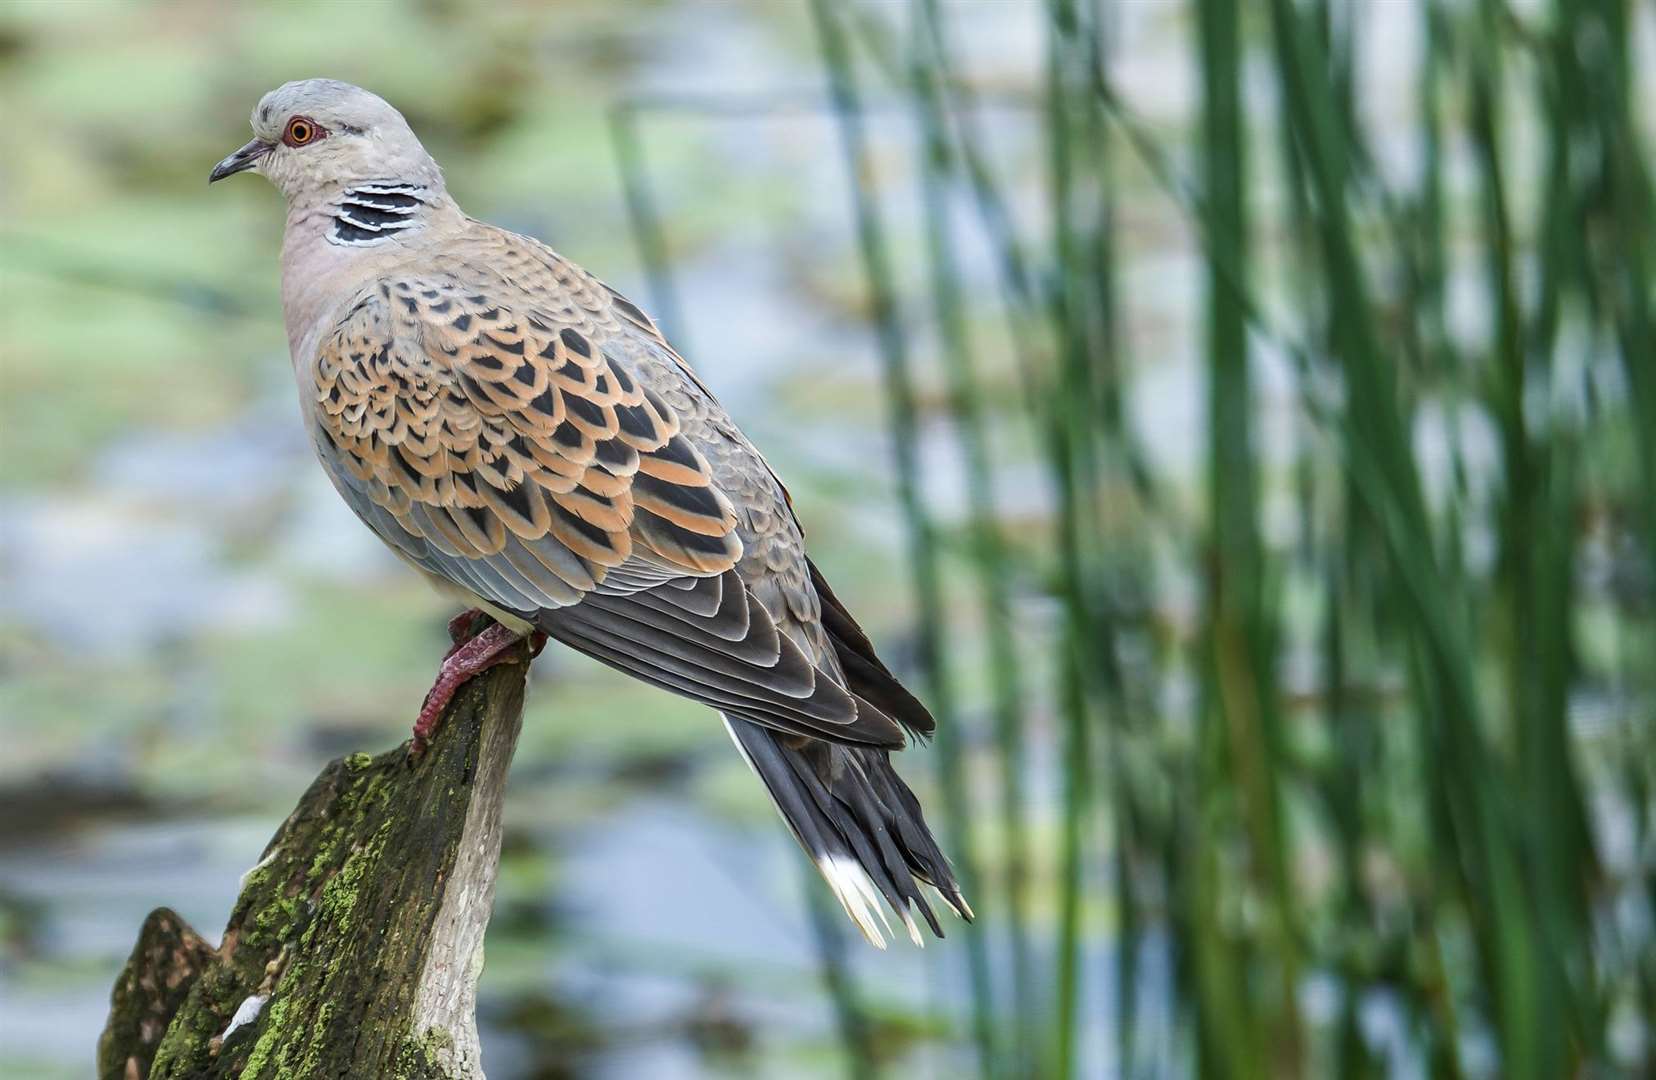 Turtle doves are a 'priority species' under threat of extinction in Kent. Credit: istock/Leopardonatree